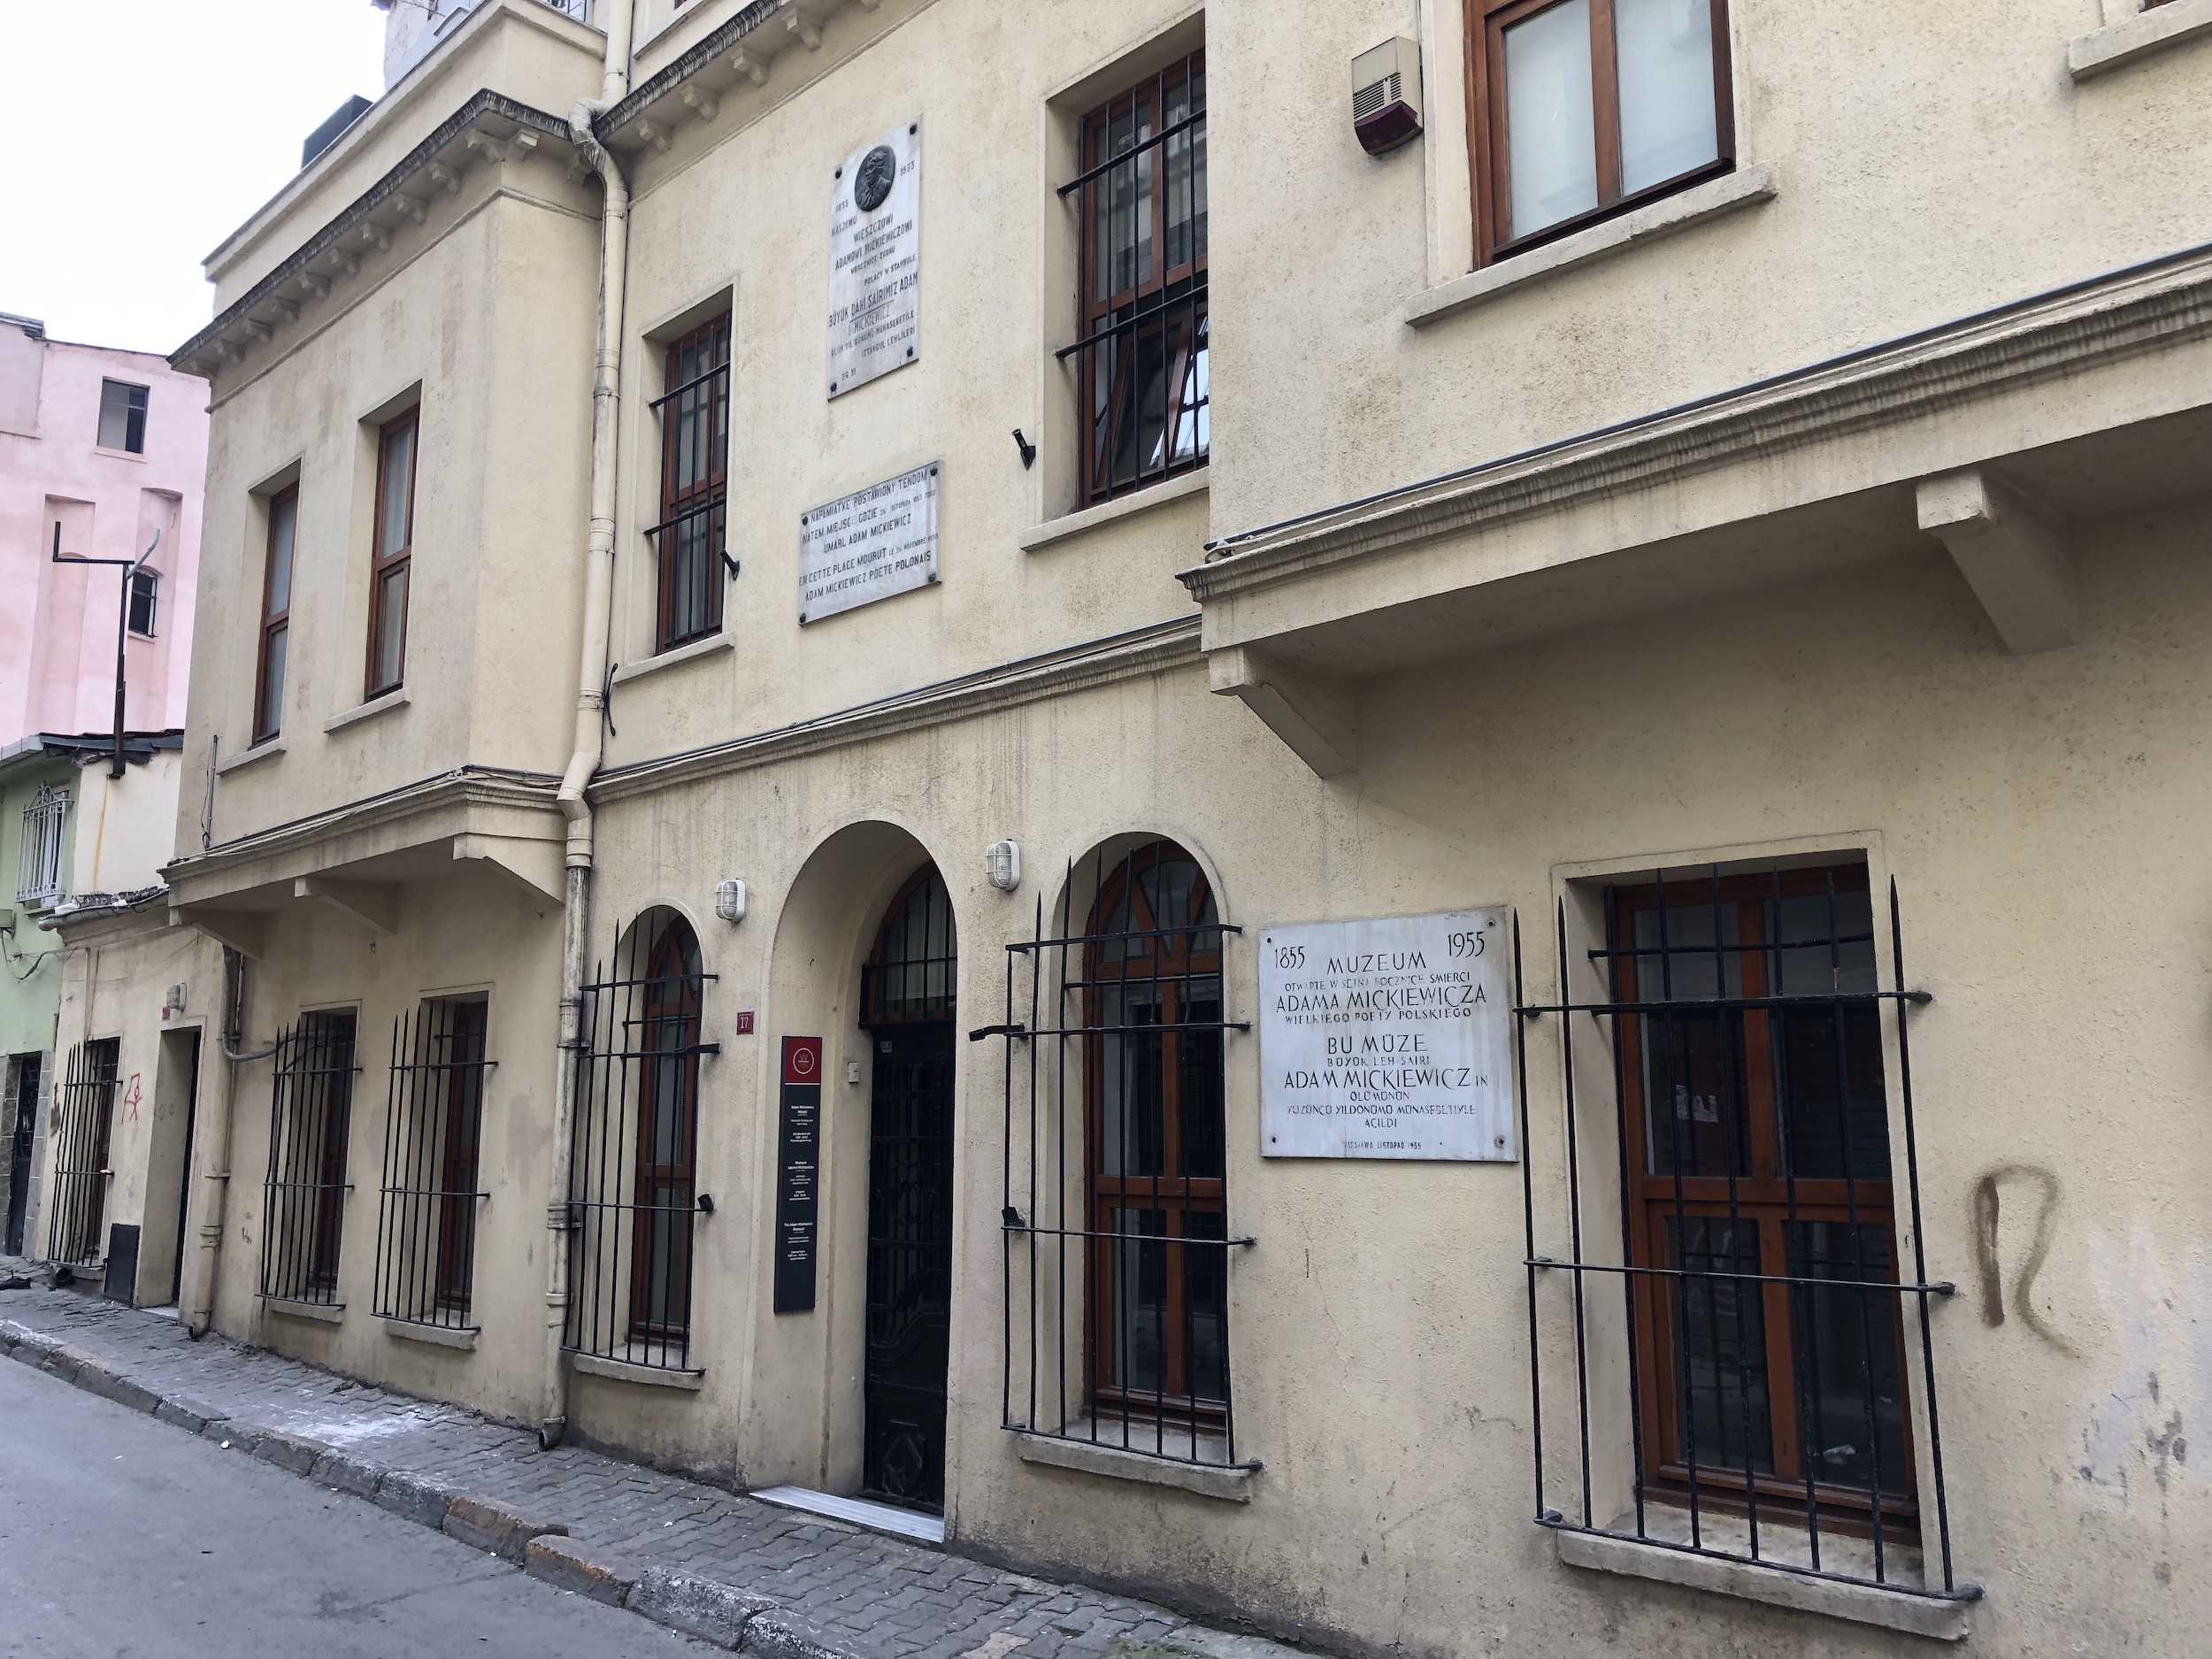 Adam Mickiewicz Museum in Tarlabaşı, Istanbul, Turkey